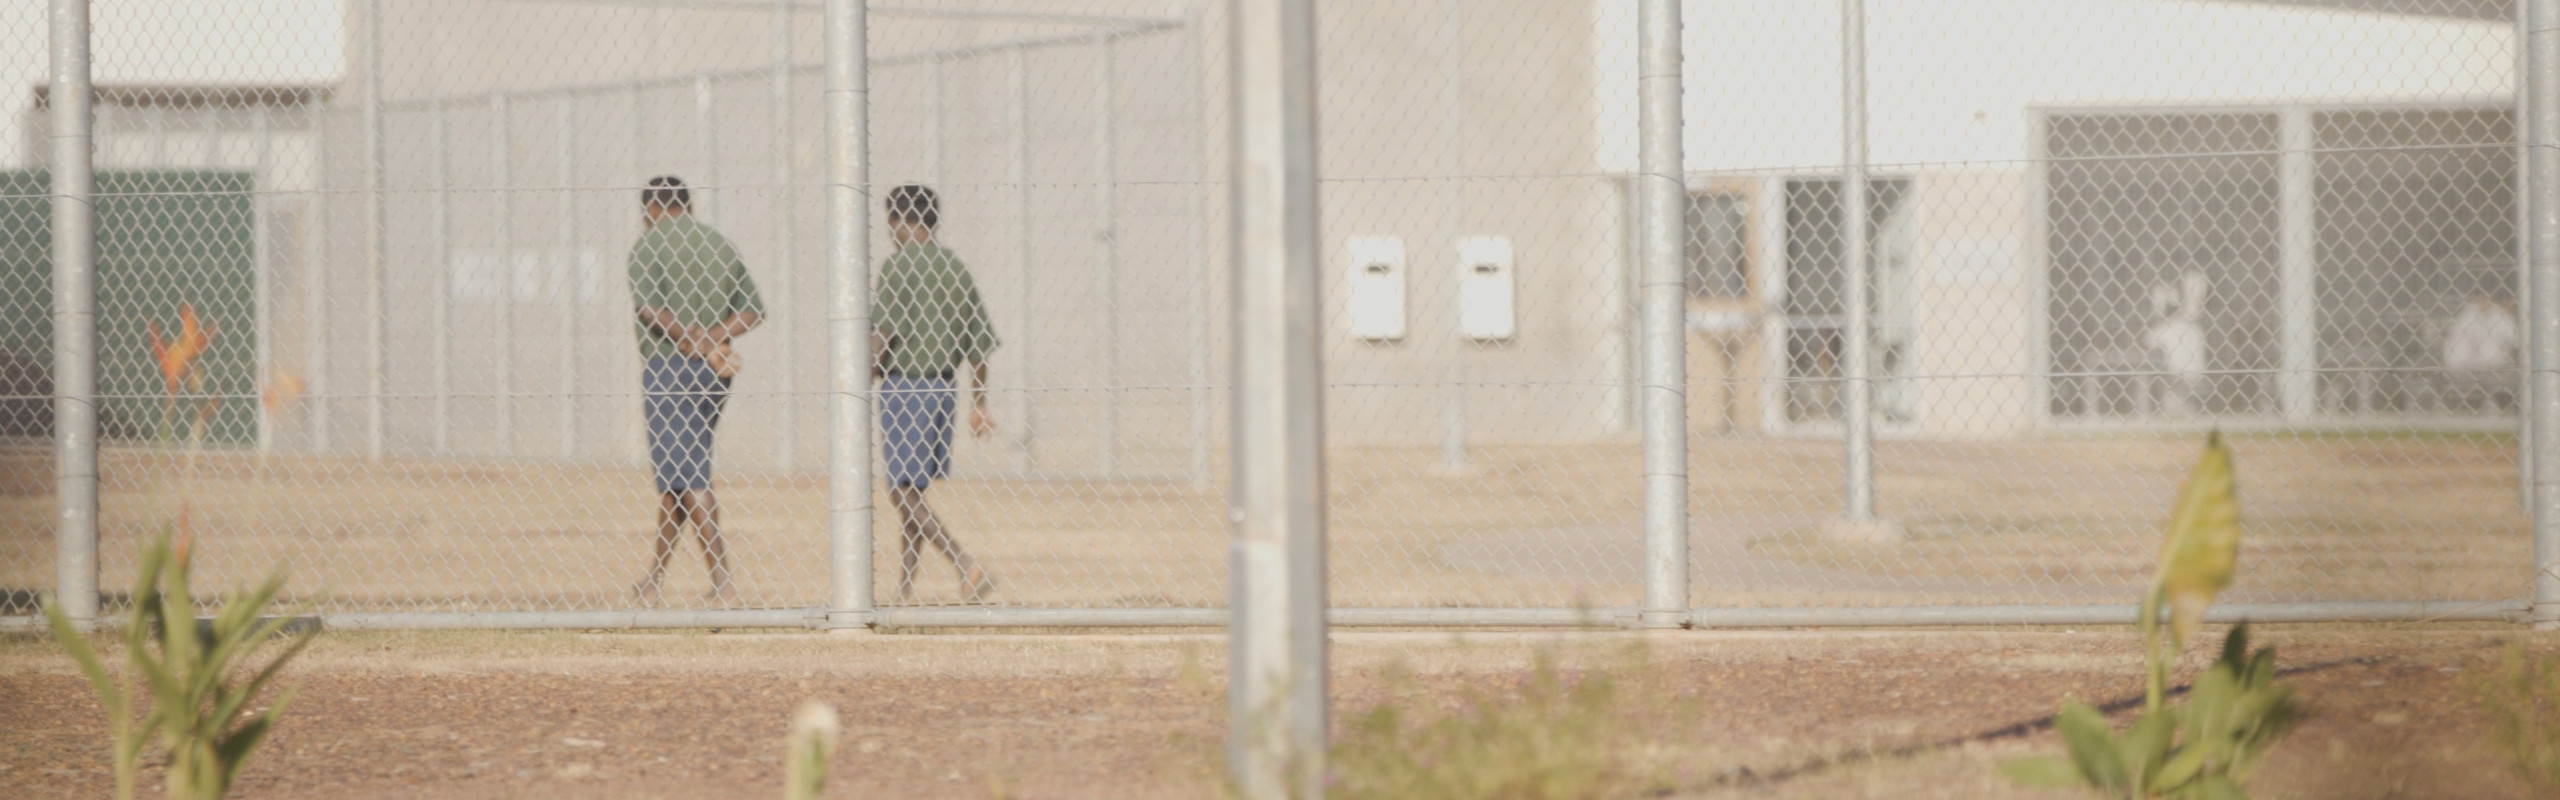 Prisoners walking in the distance